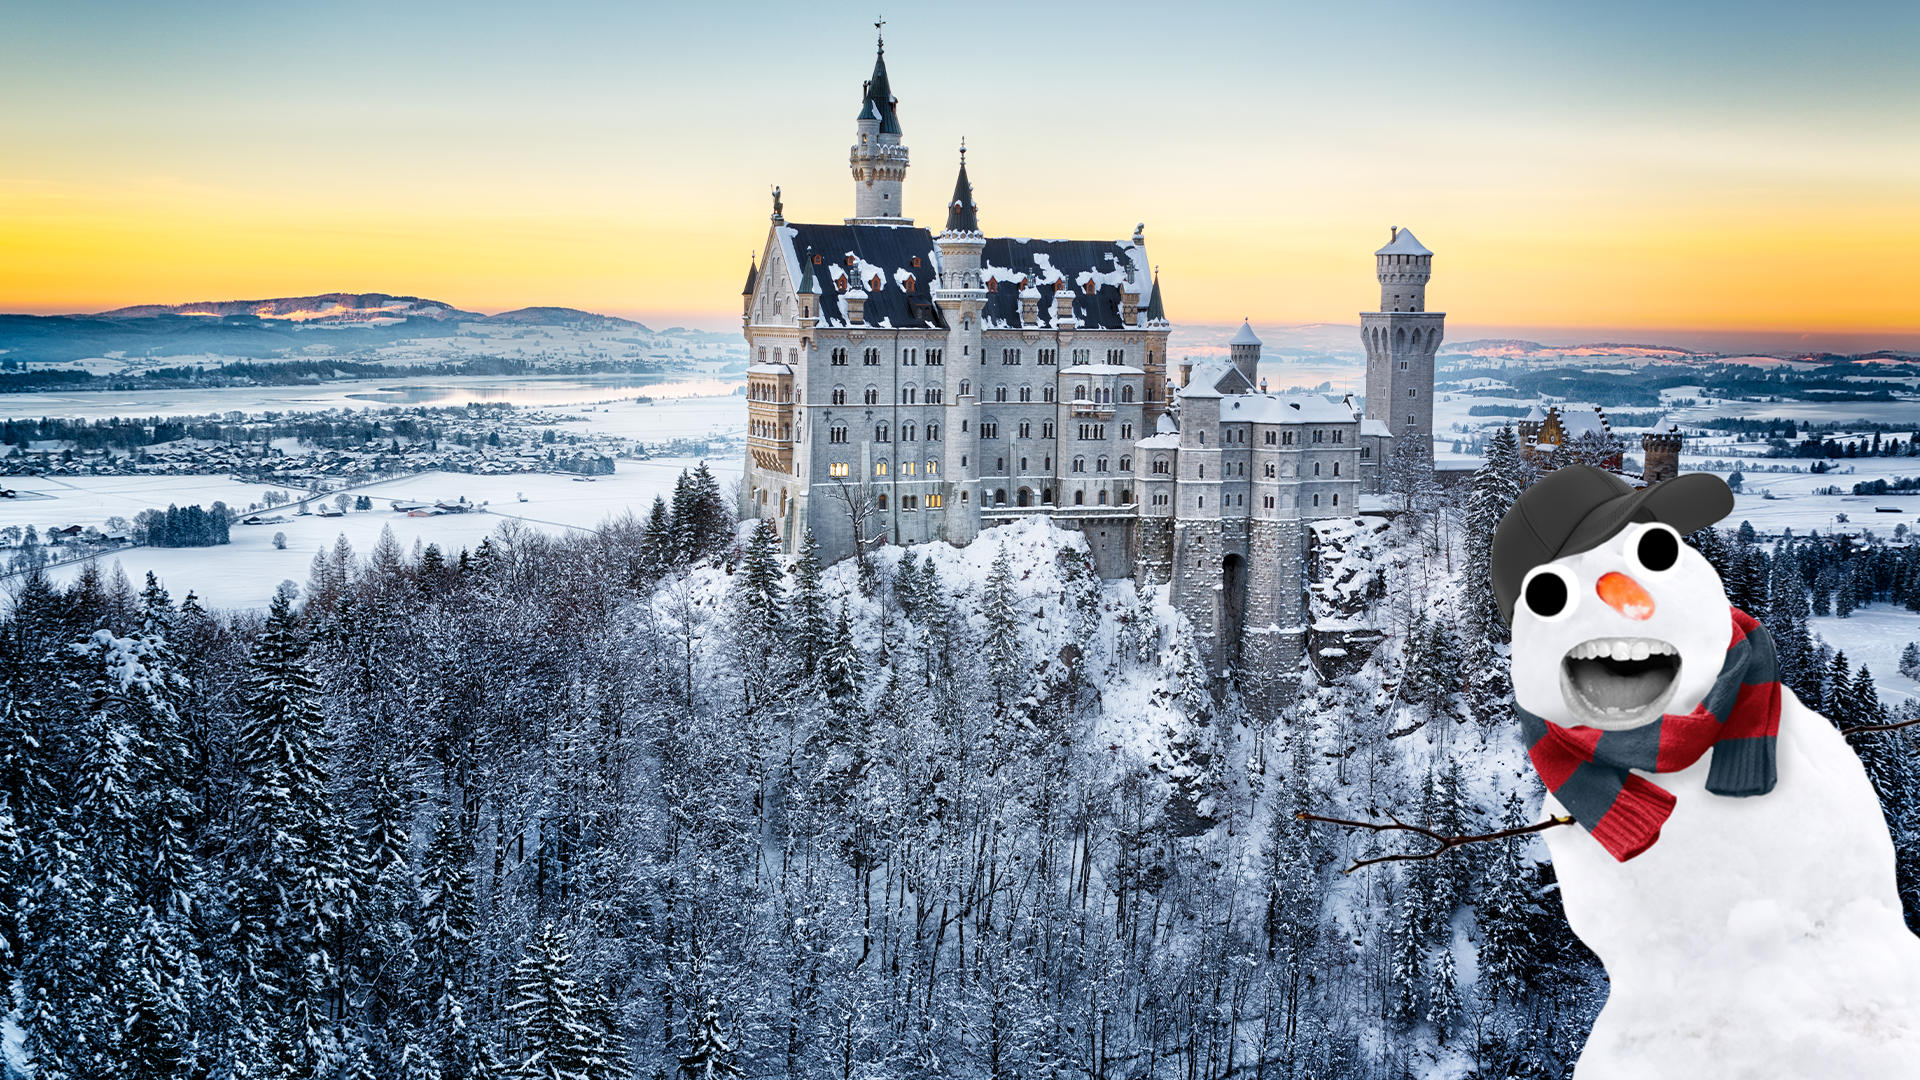 Snowy castle with derpy snowman